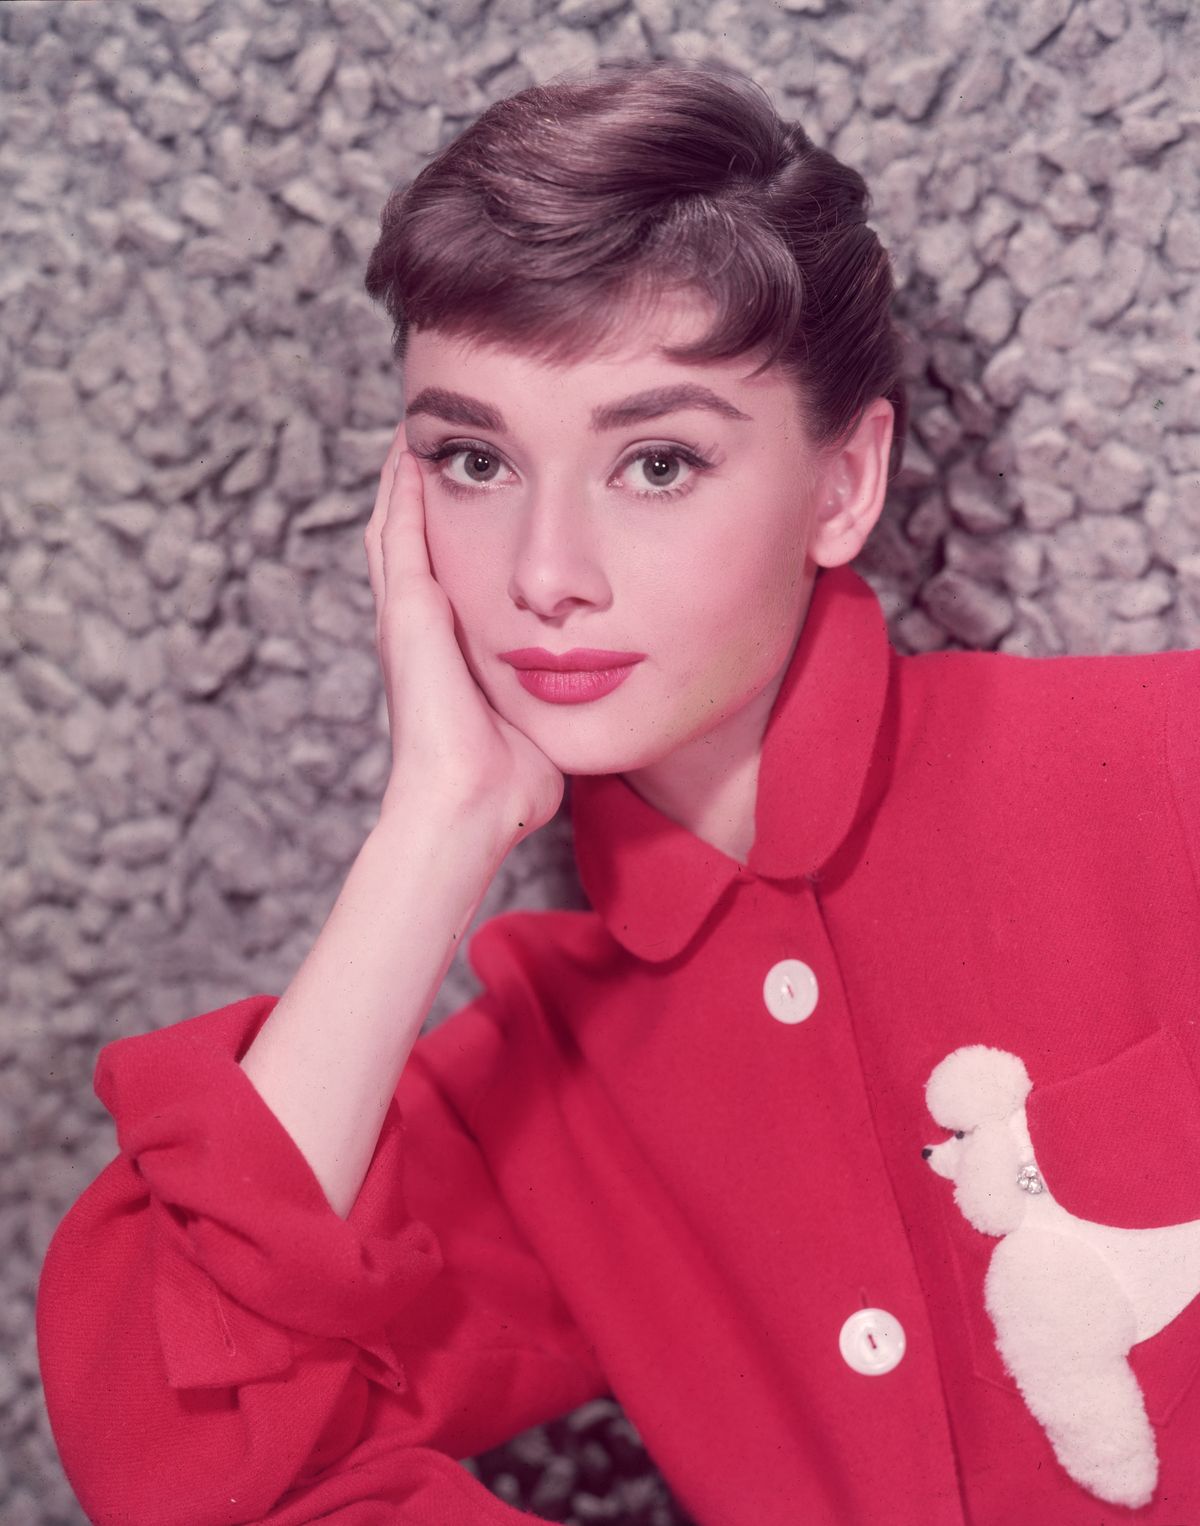 L'actrice Audrey Hepburn | Photo : Getty Images